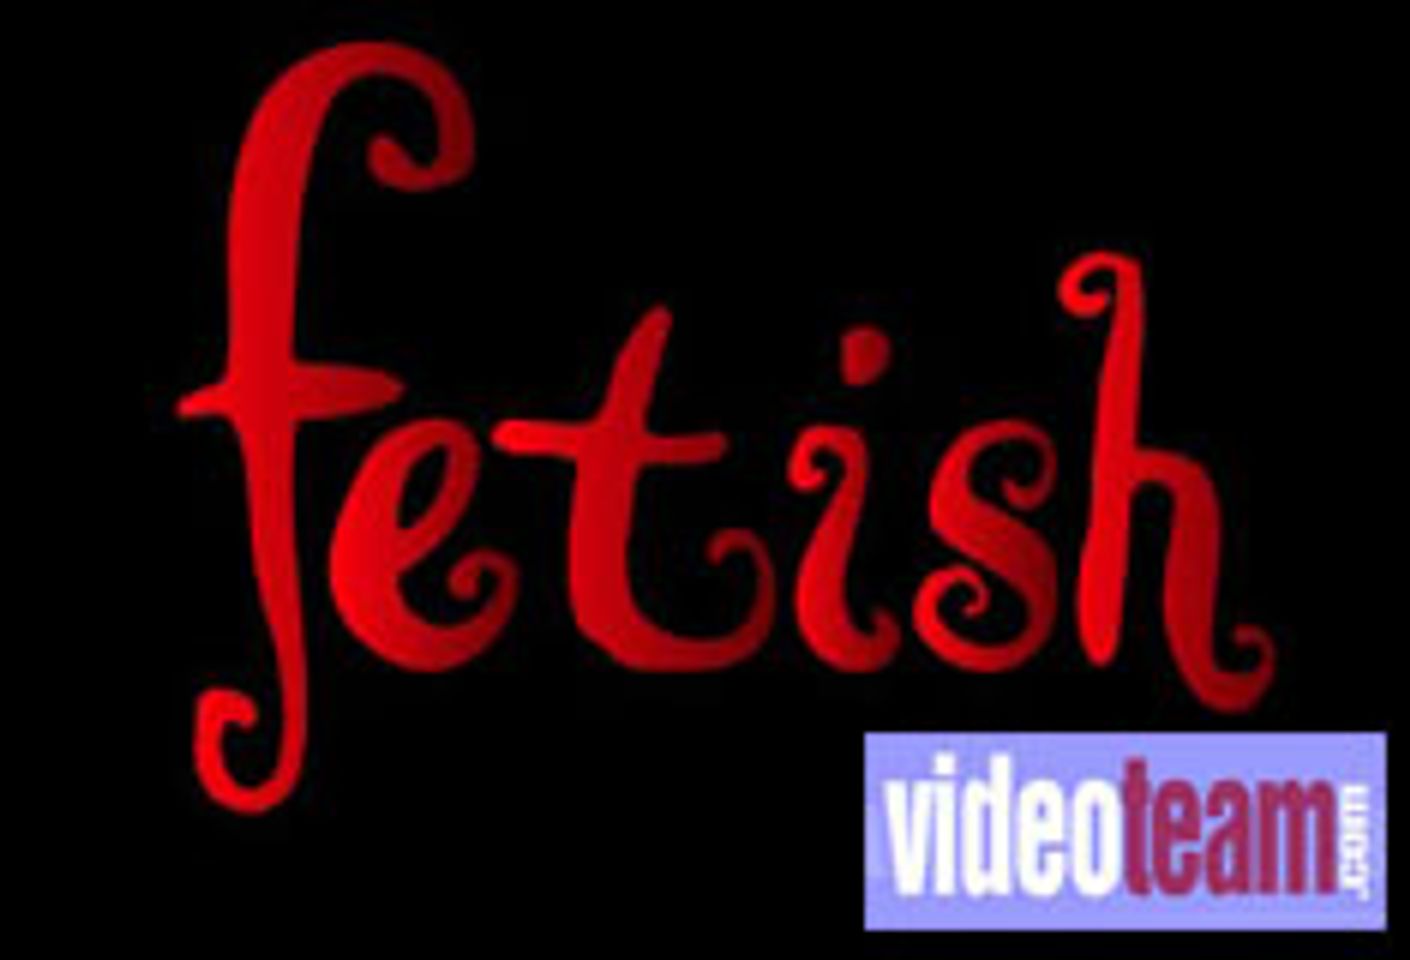 Video Team Sponsors Club Fetish Tonight